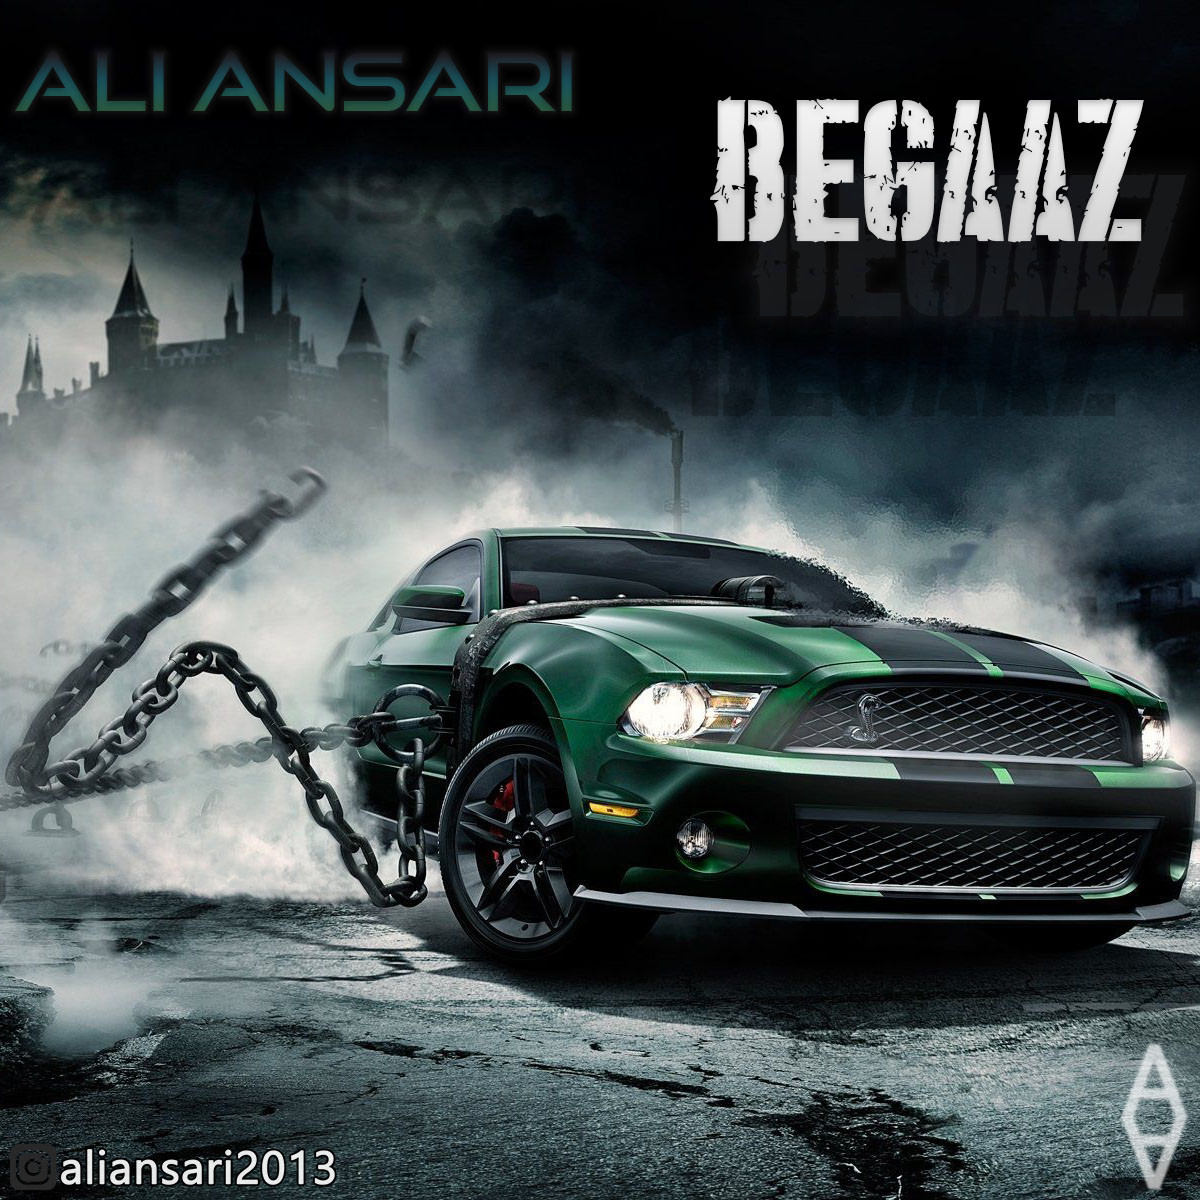 Ali Ansari - Begaaz